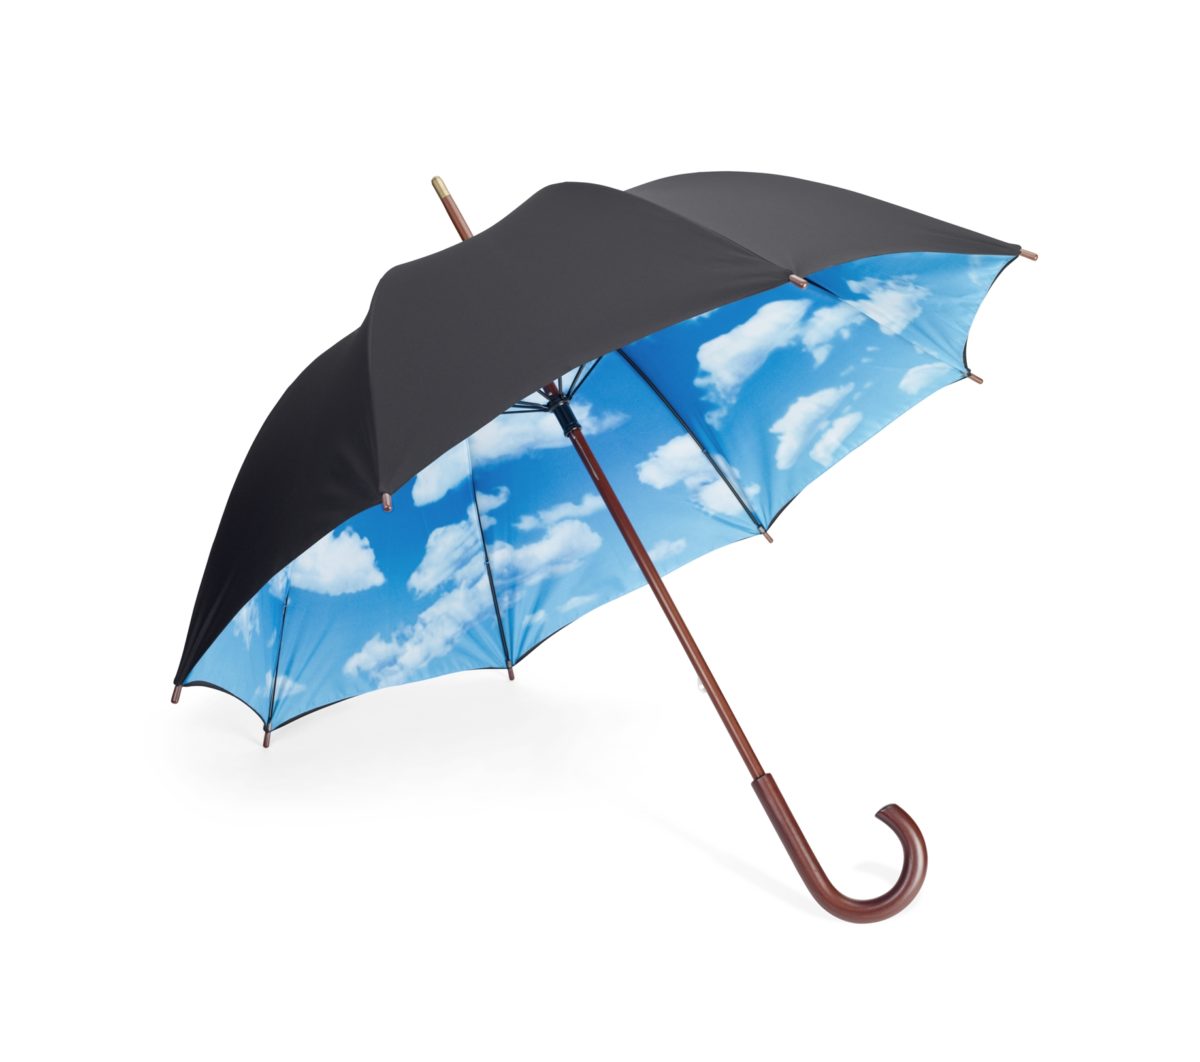 Sky Umbrella at MoMA Design Store